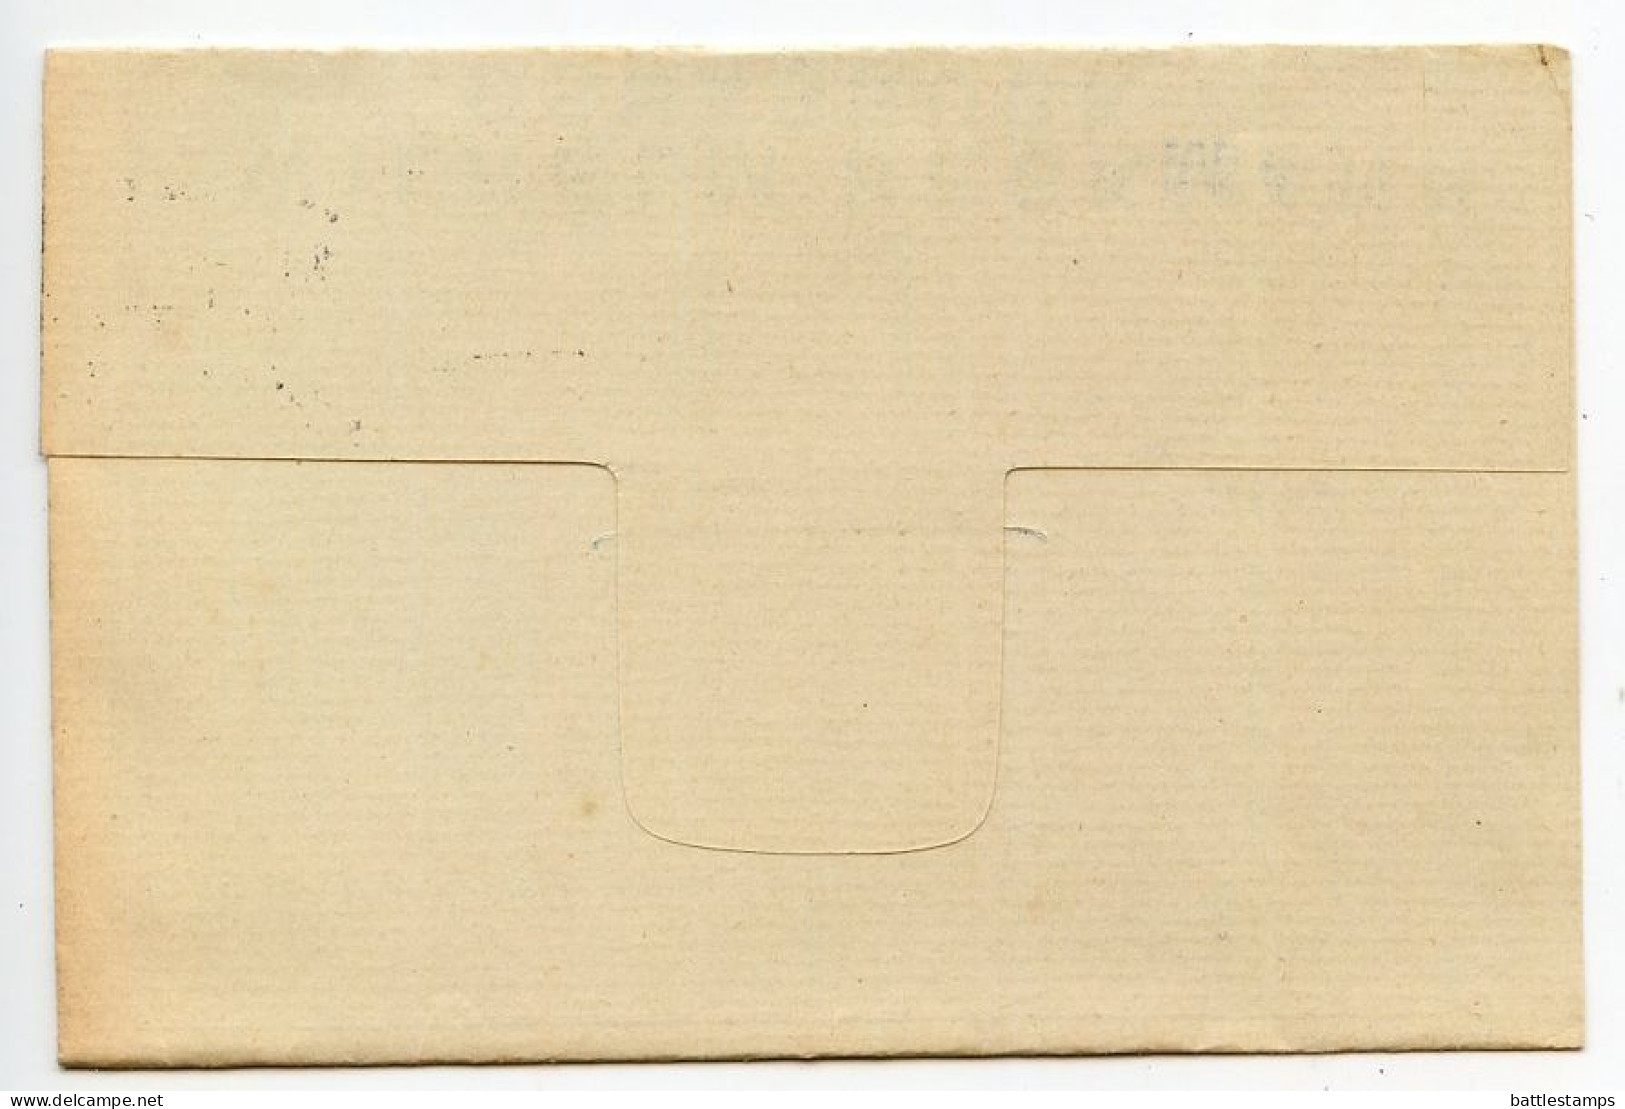 Germany 1937 Folded Zahlkarte & Invoice; Osnabrück - F. Wilhelm Beckmann; 3pf. Hindenburg; Telephone Slogan Cancel - Cartas & Documentos